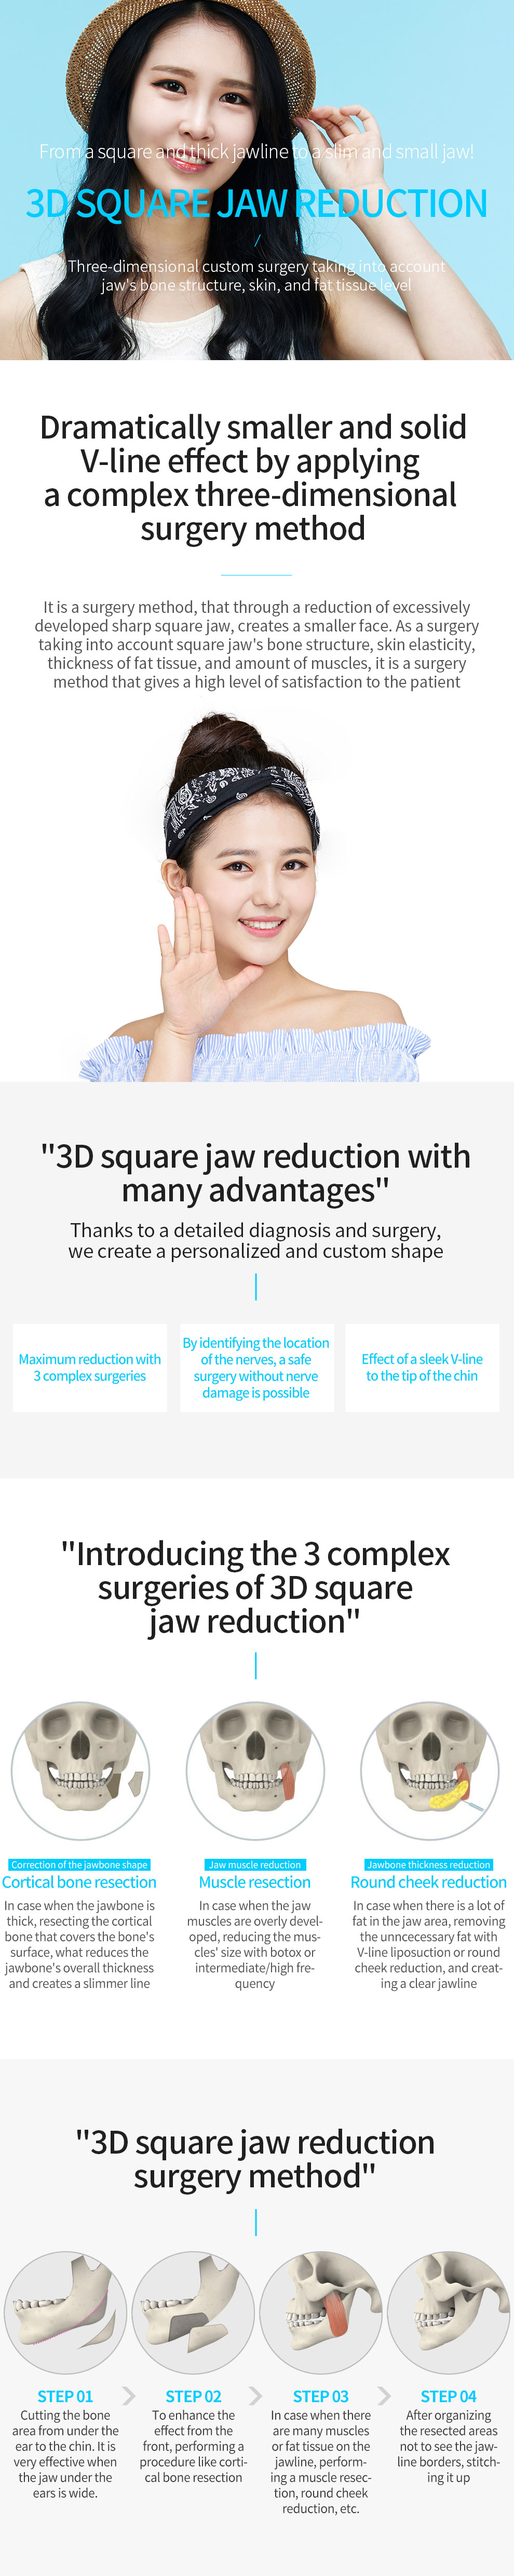 Glovi 3D Square Jaw Reduction img